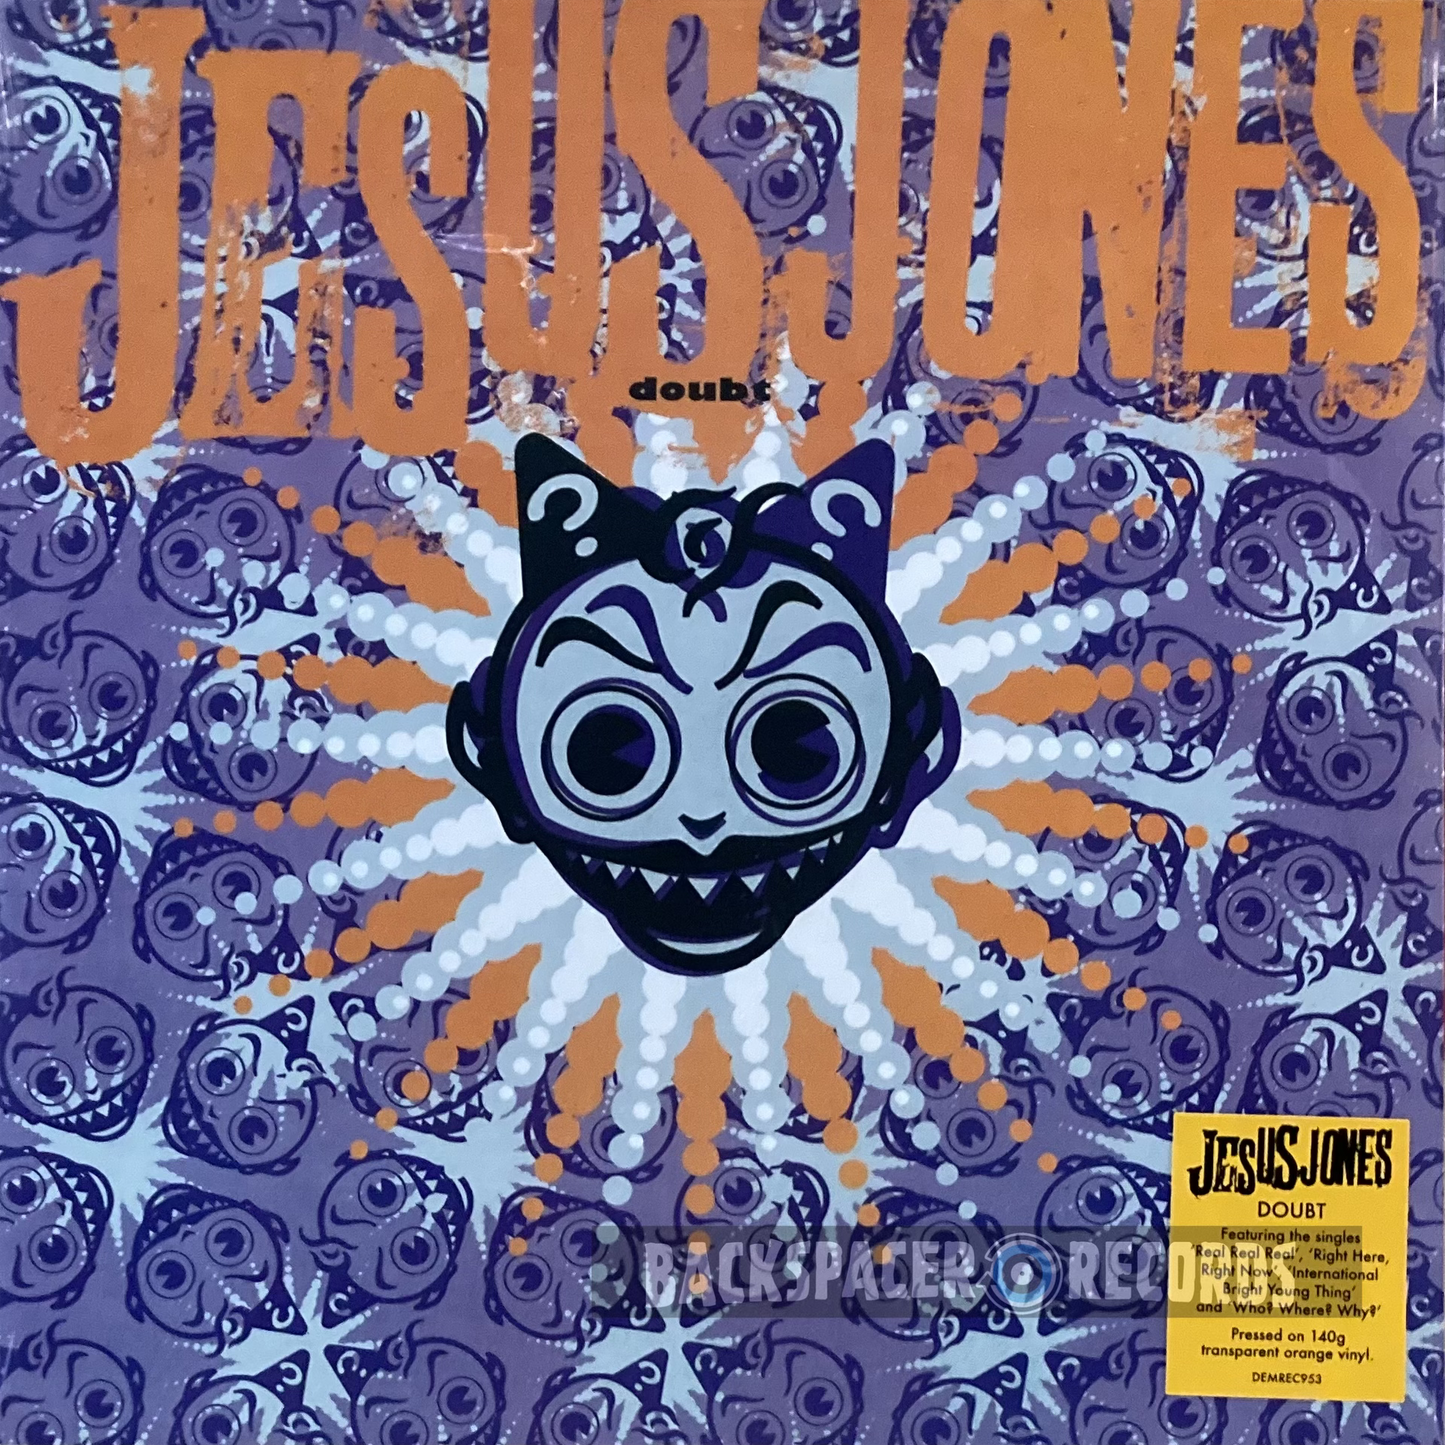 Jesus Jones – Doubt (Limited Edition) LP (Sealed)